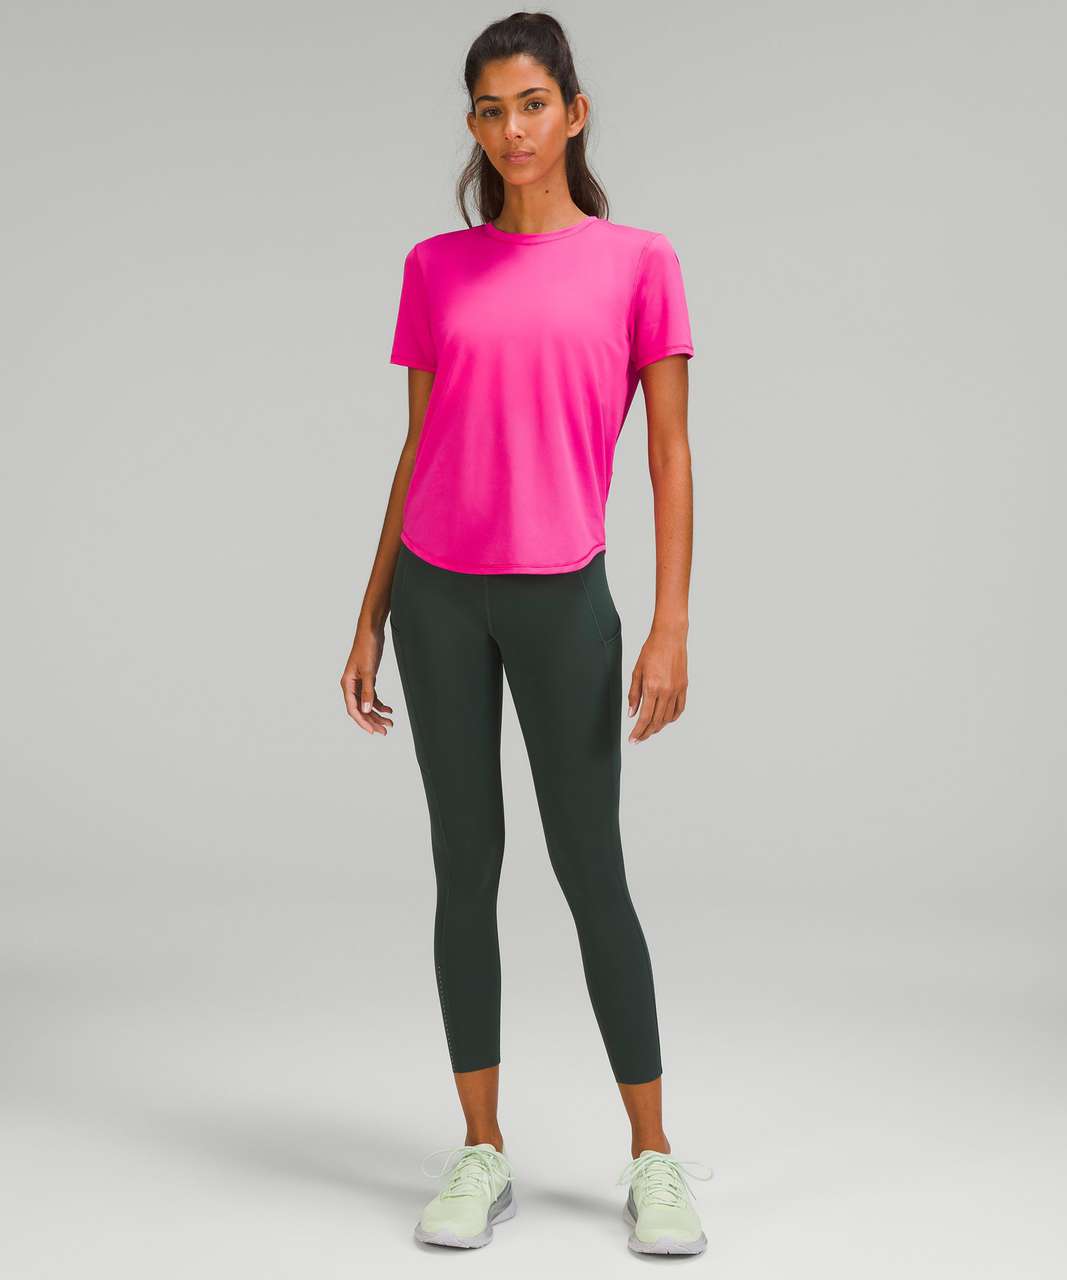 Lululemon High-Neck Running and Training T-Shirt - Sonic Pink